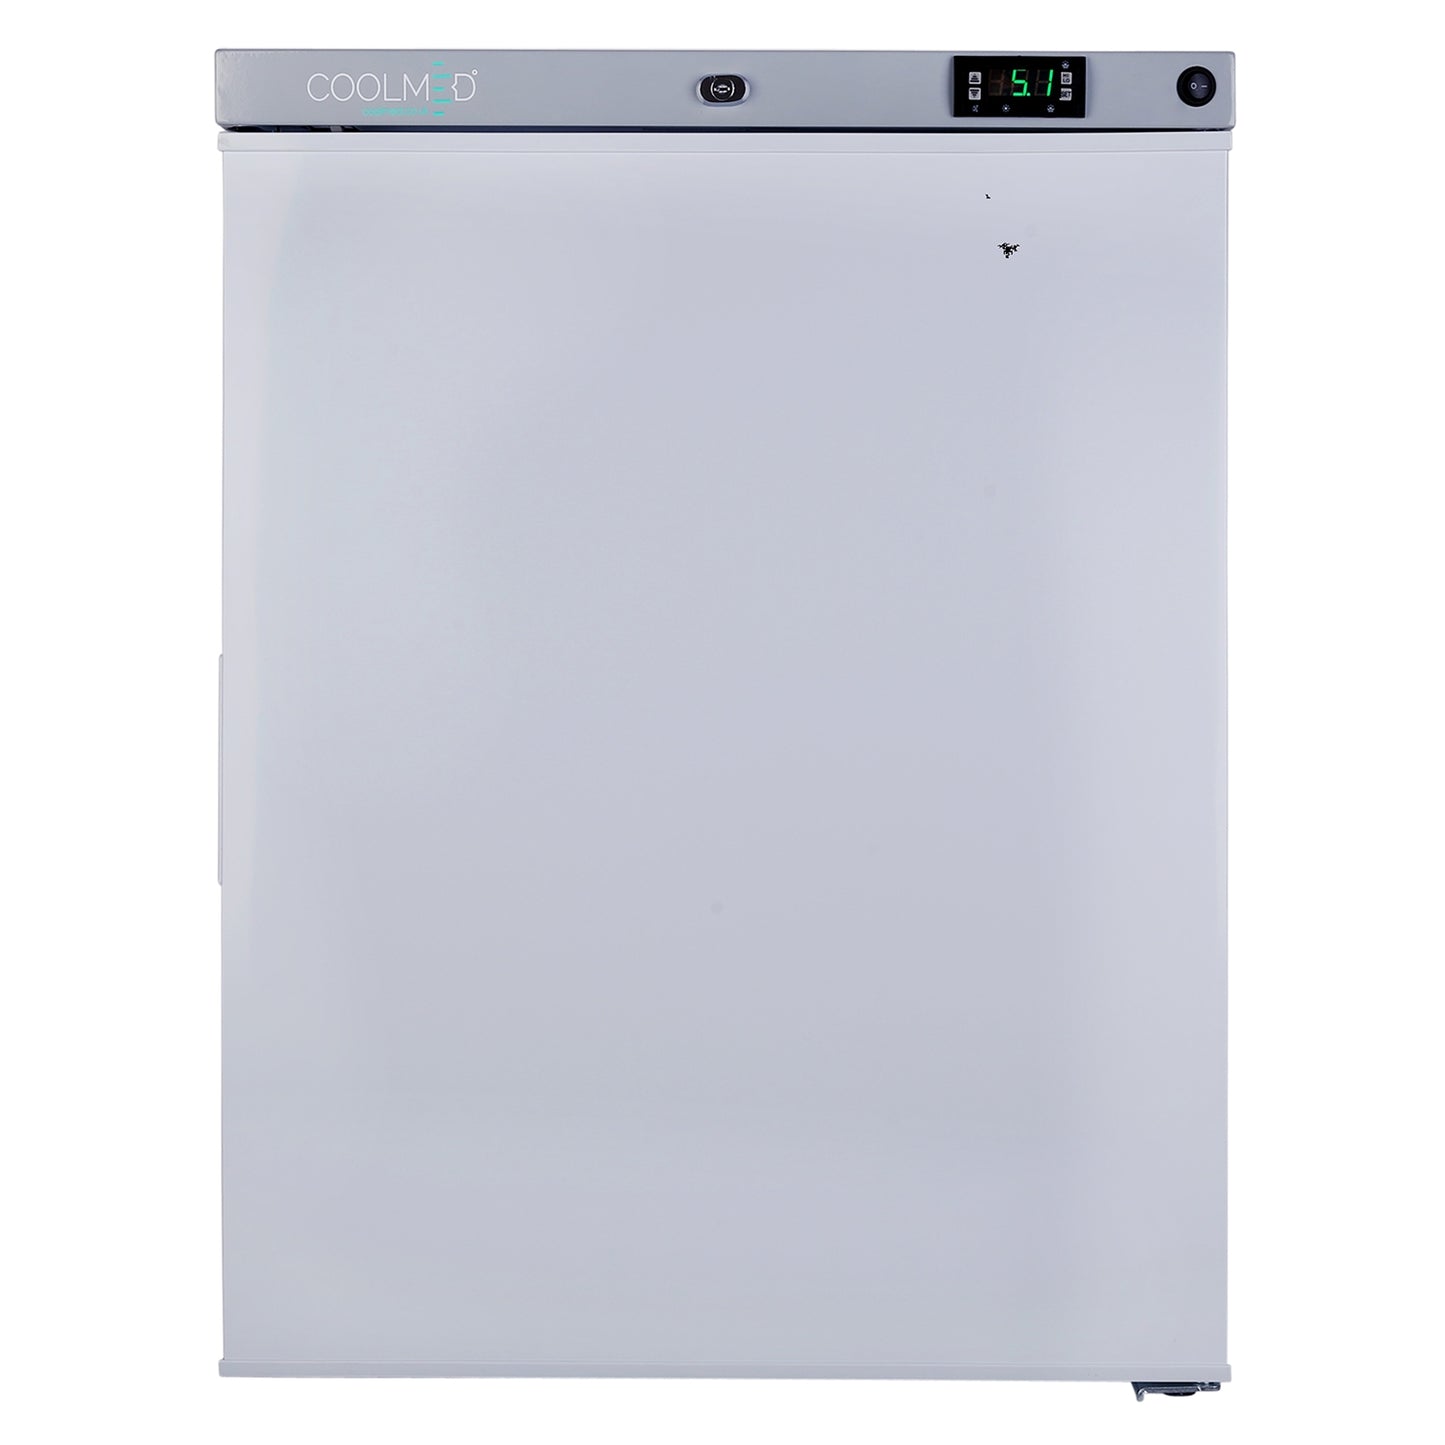 CoolMed Solid Door Refrigerator - 145 Litres - CMS125